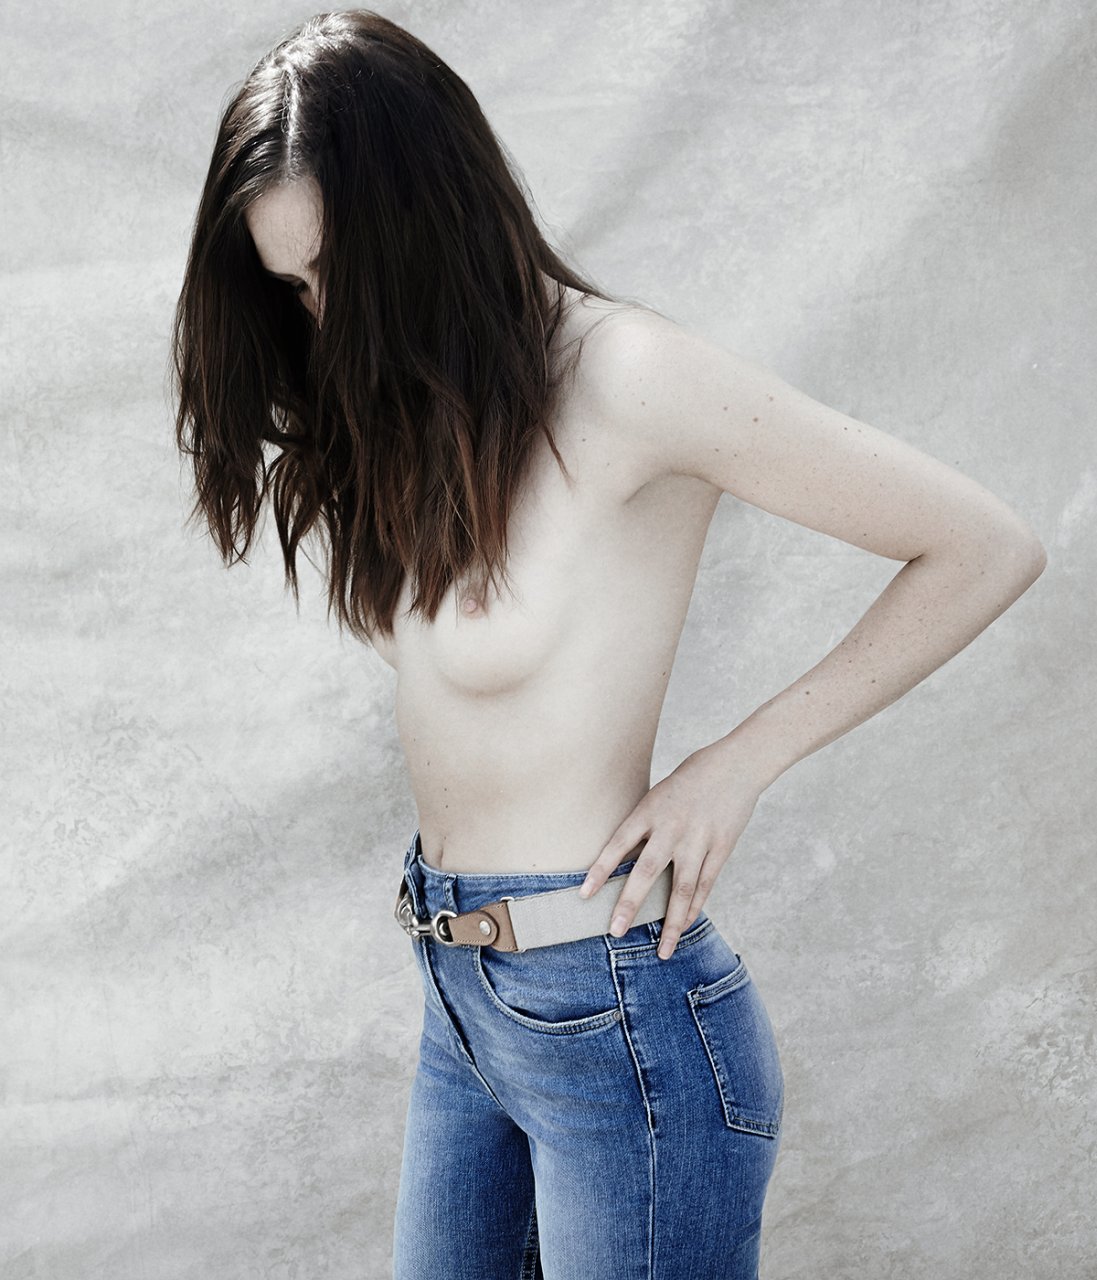 Maxine Schiff Topless (12 Photos)